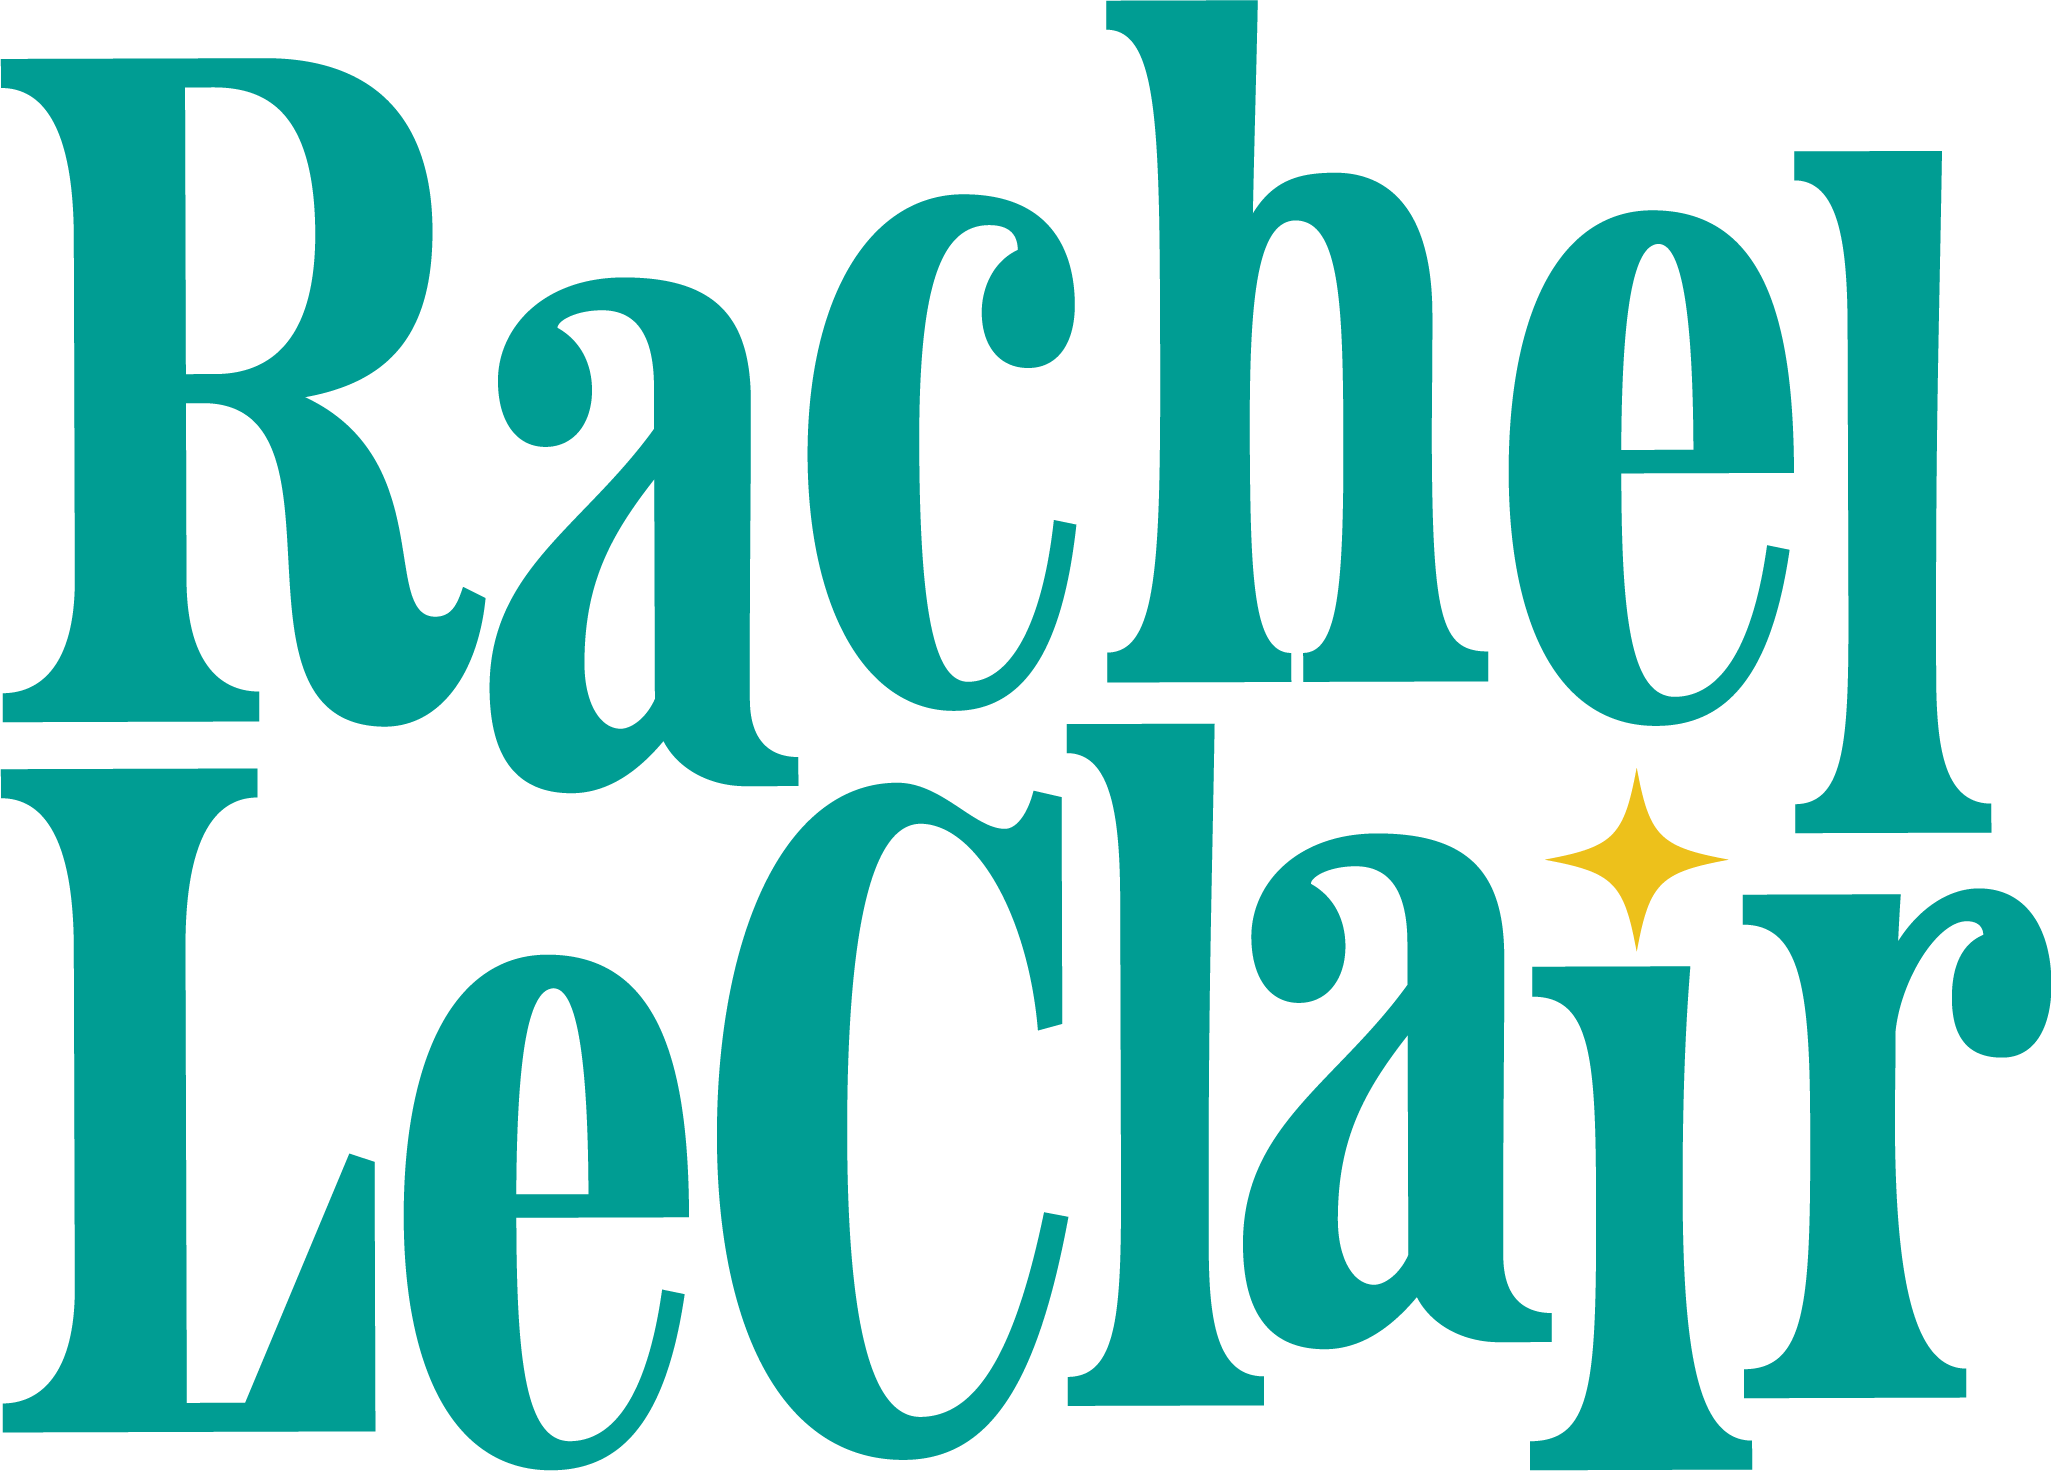 Rachel LeClair